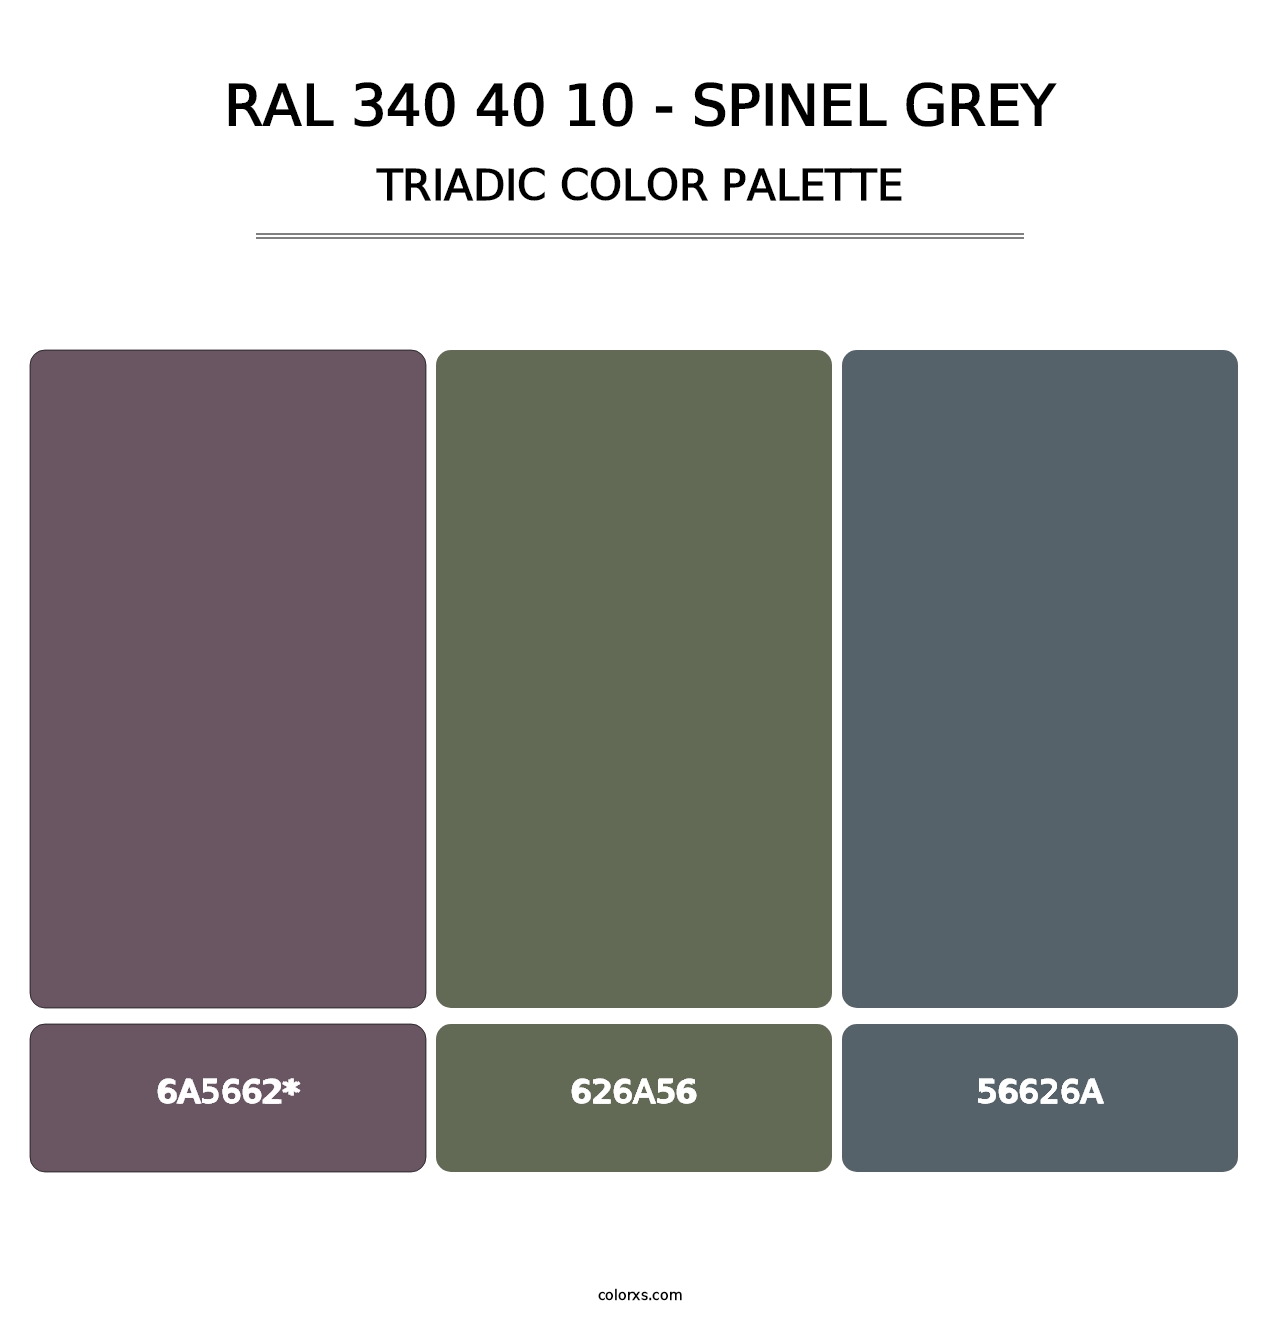 RAL 340 40 10 - Spinel Grey - Triadic Color Palette